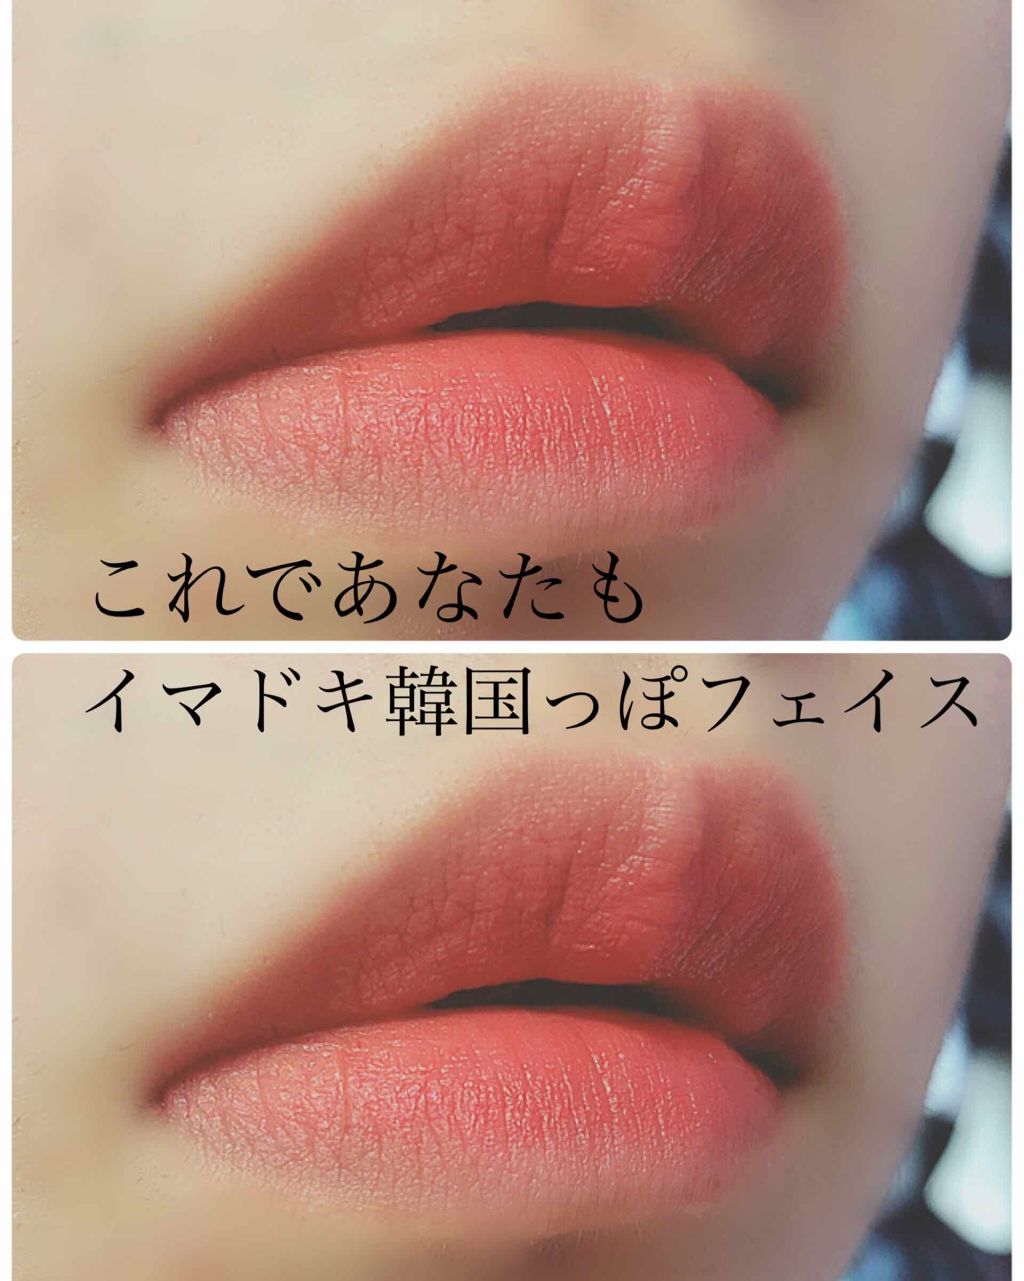 Velvet Lip Tint 3ceの口コミ 簡単グラデリップでイマドキ韓国っぽフェイ By てんぼう 混合肌 10代後半 Lips